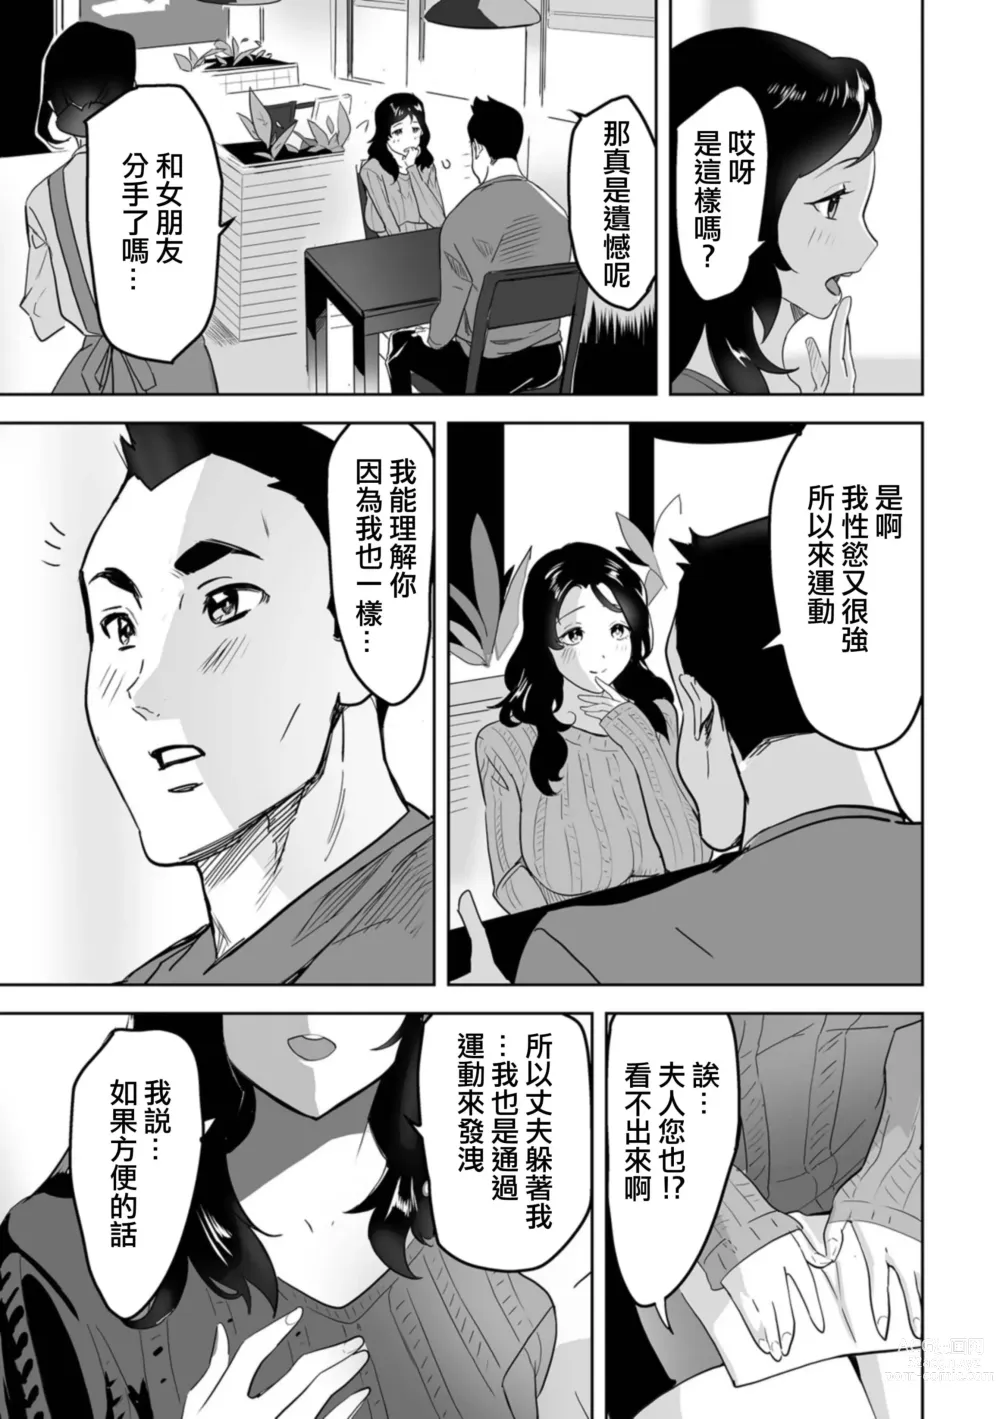 Page 3 of manga Oku-san no Maruhi Kenkouhou